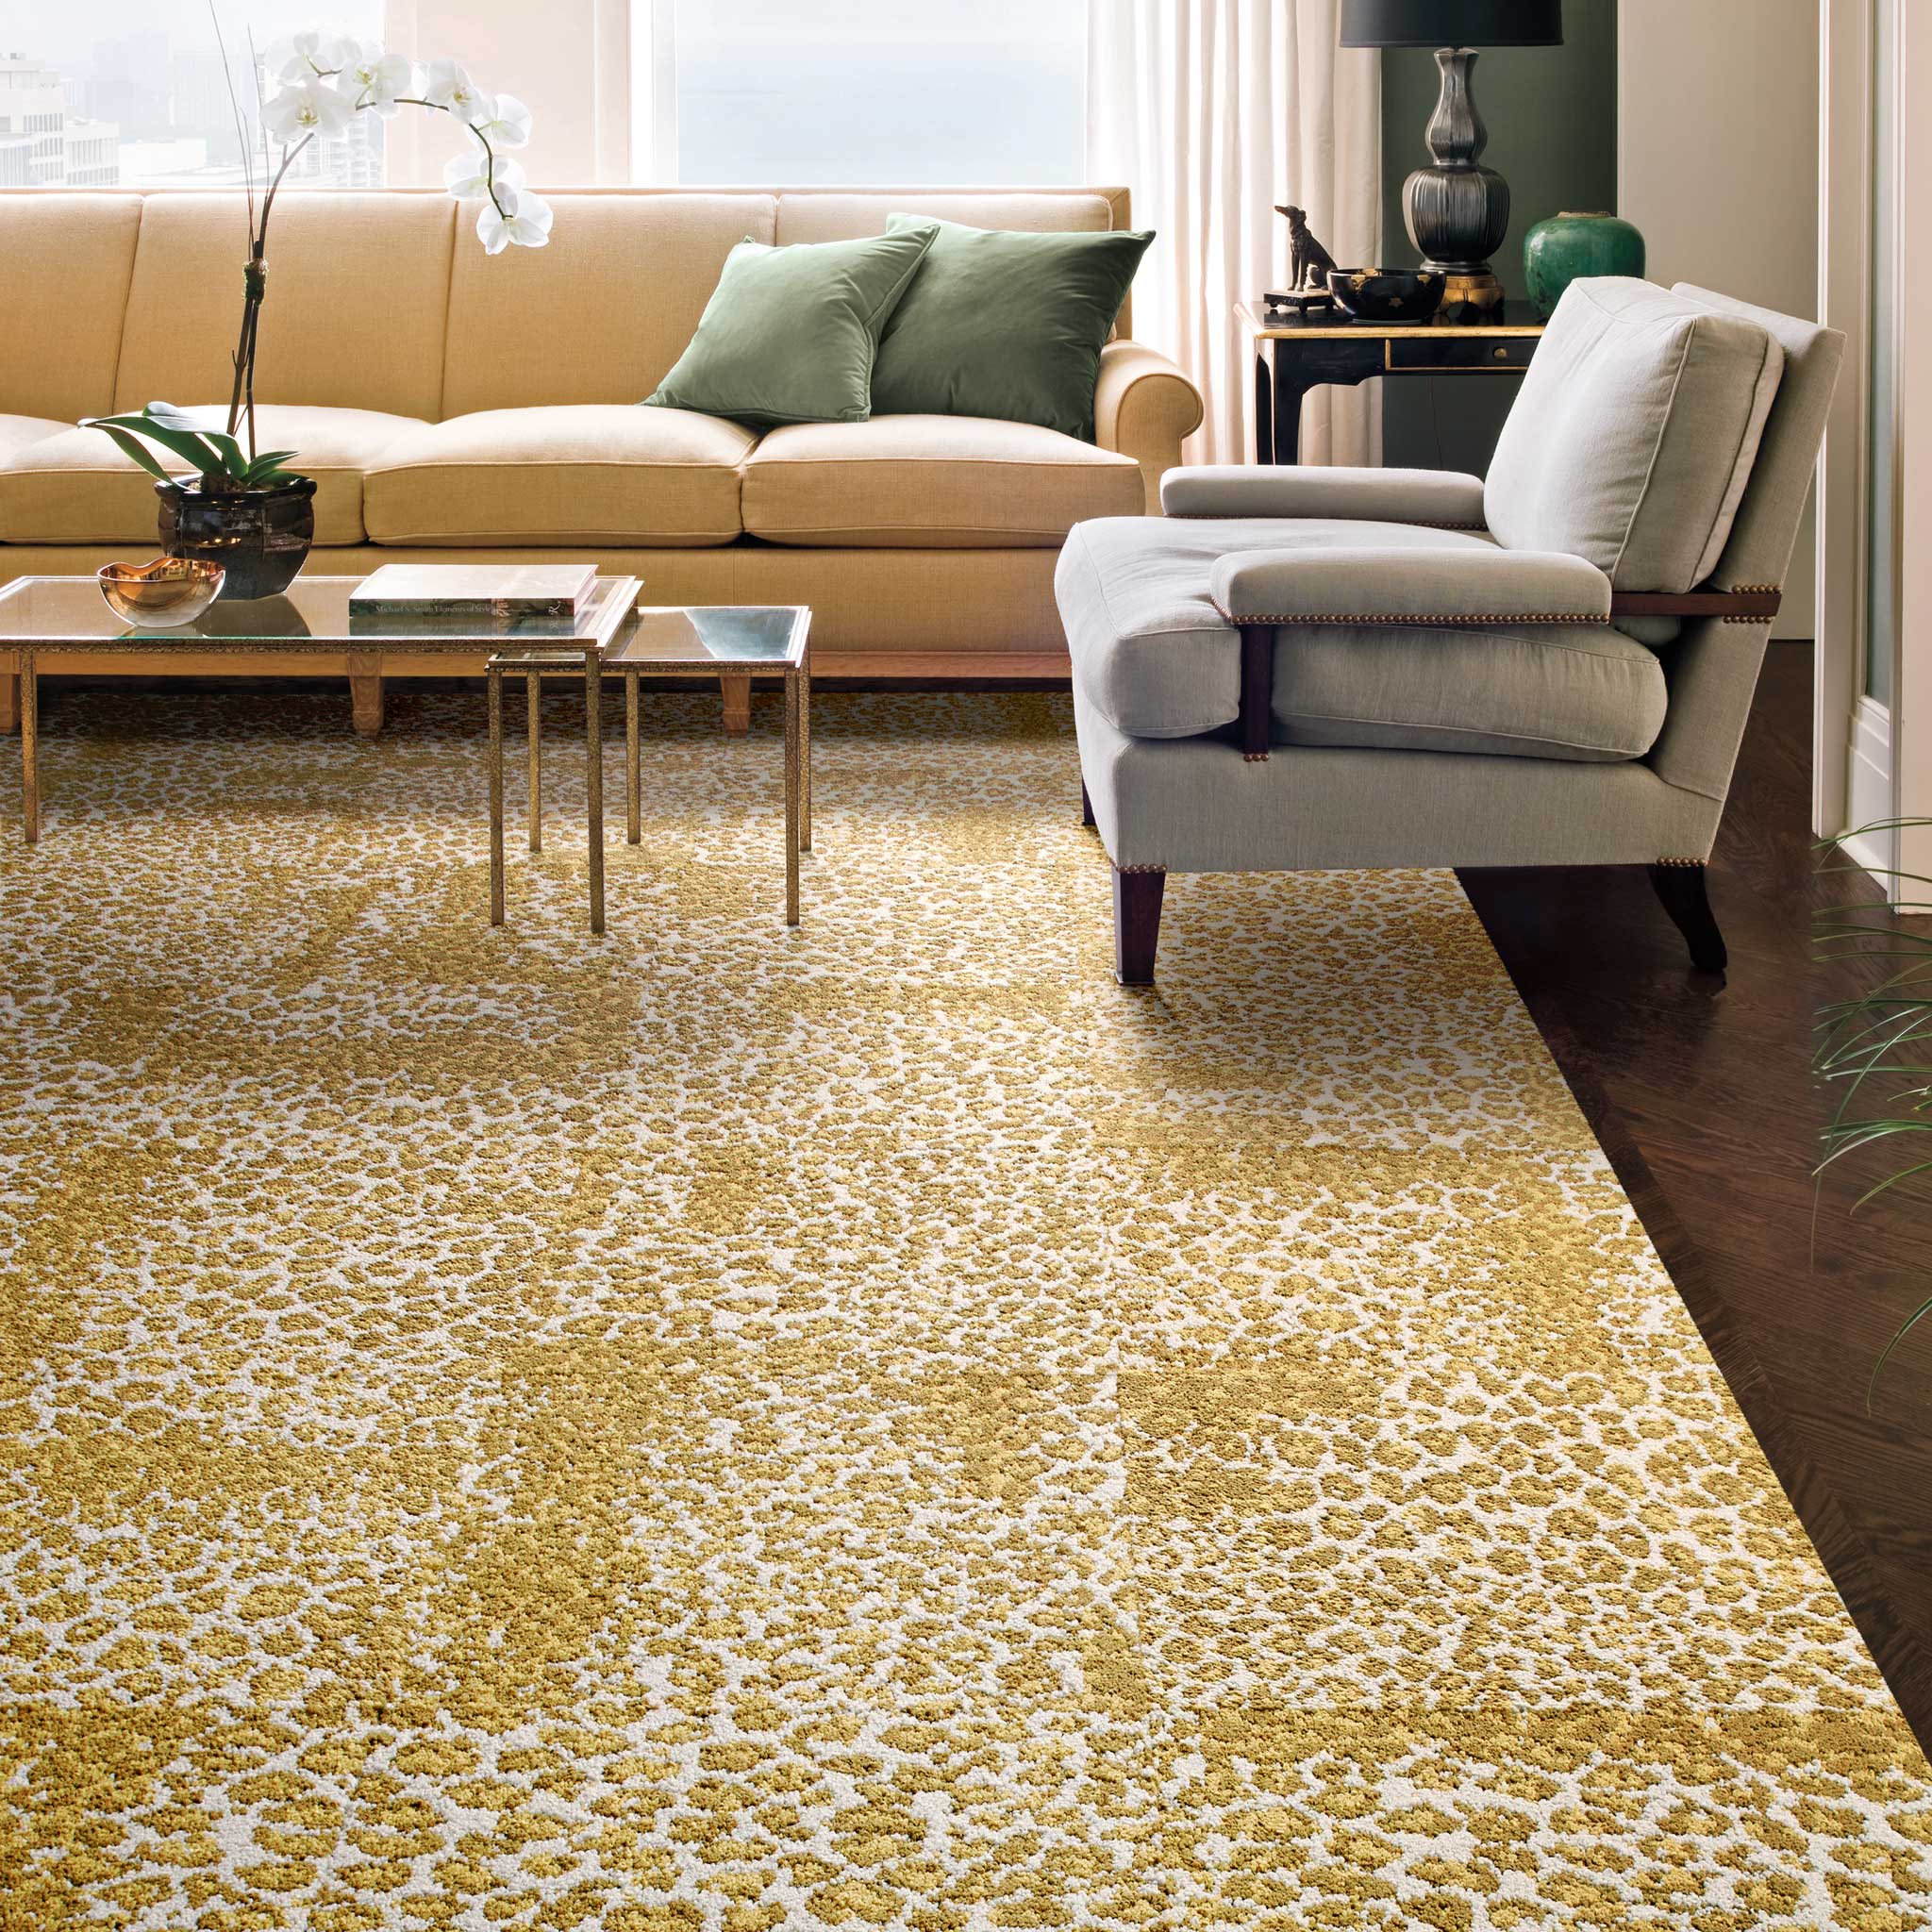 FLOR Carpet Tiles - Stellar Interior Design